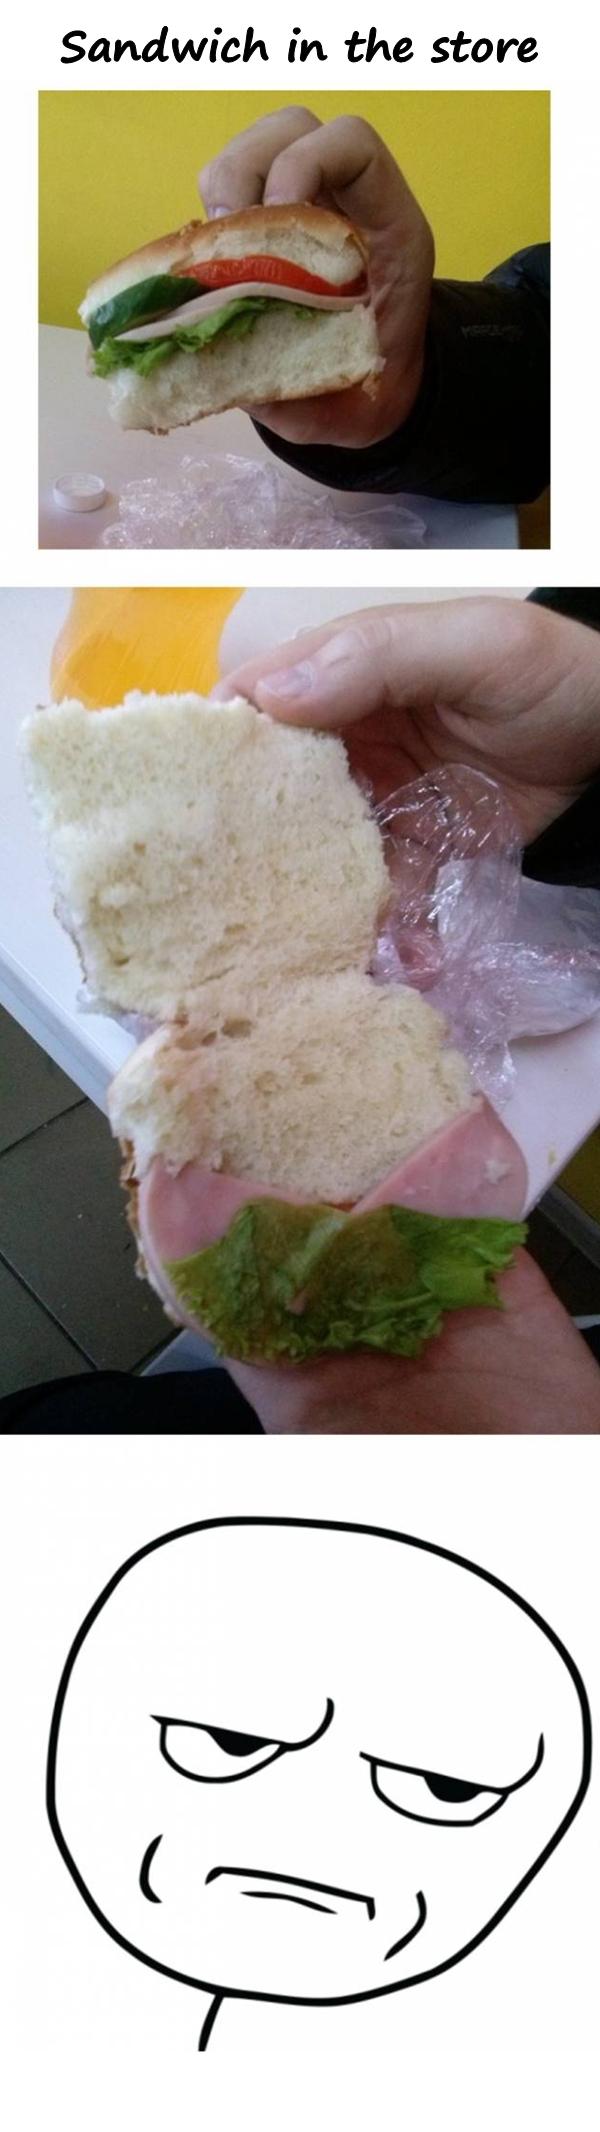 Sandwich in the store